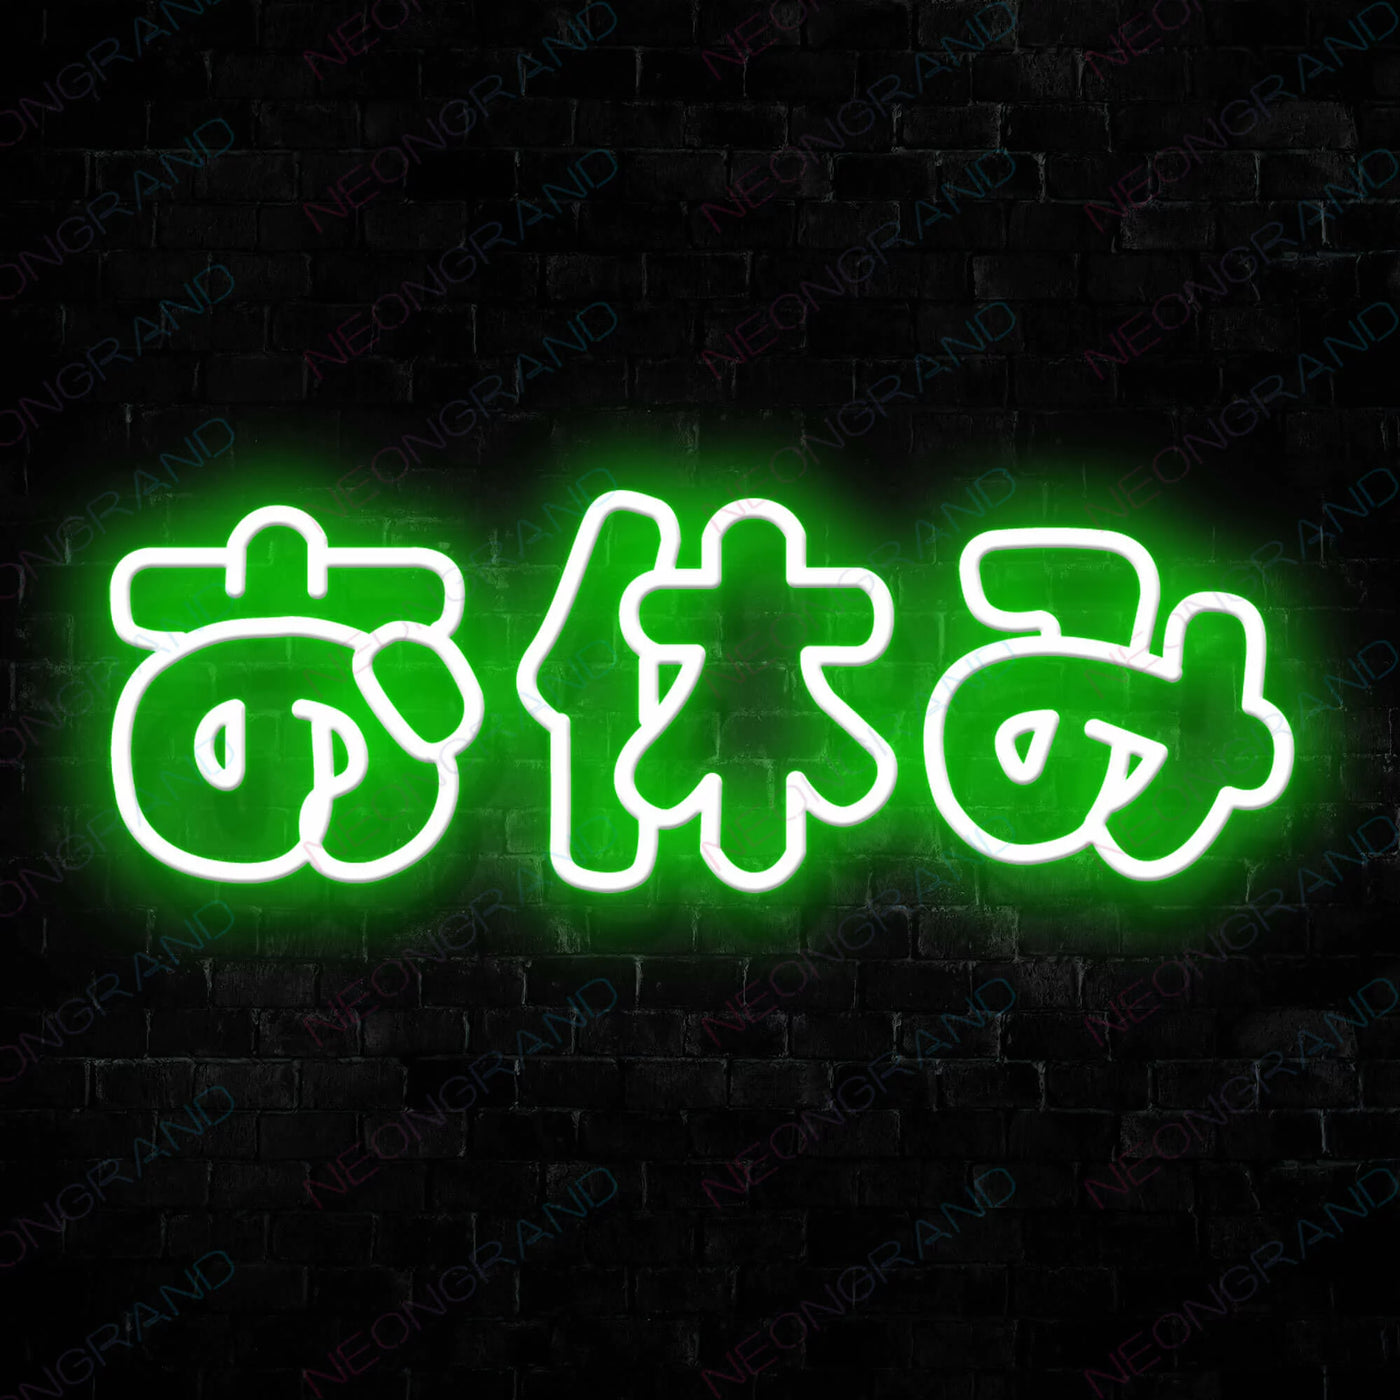 Good Night Japanese Neon Sign Green